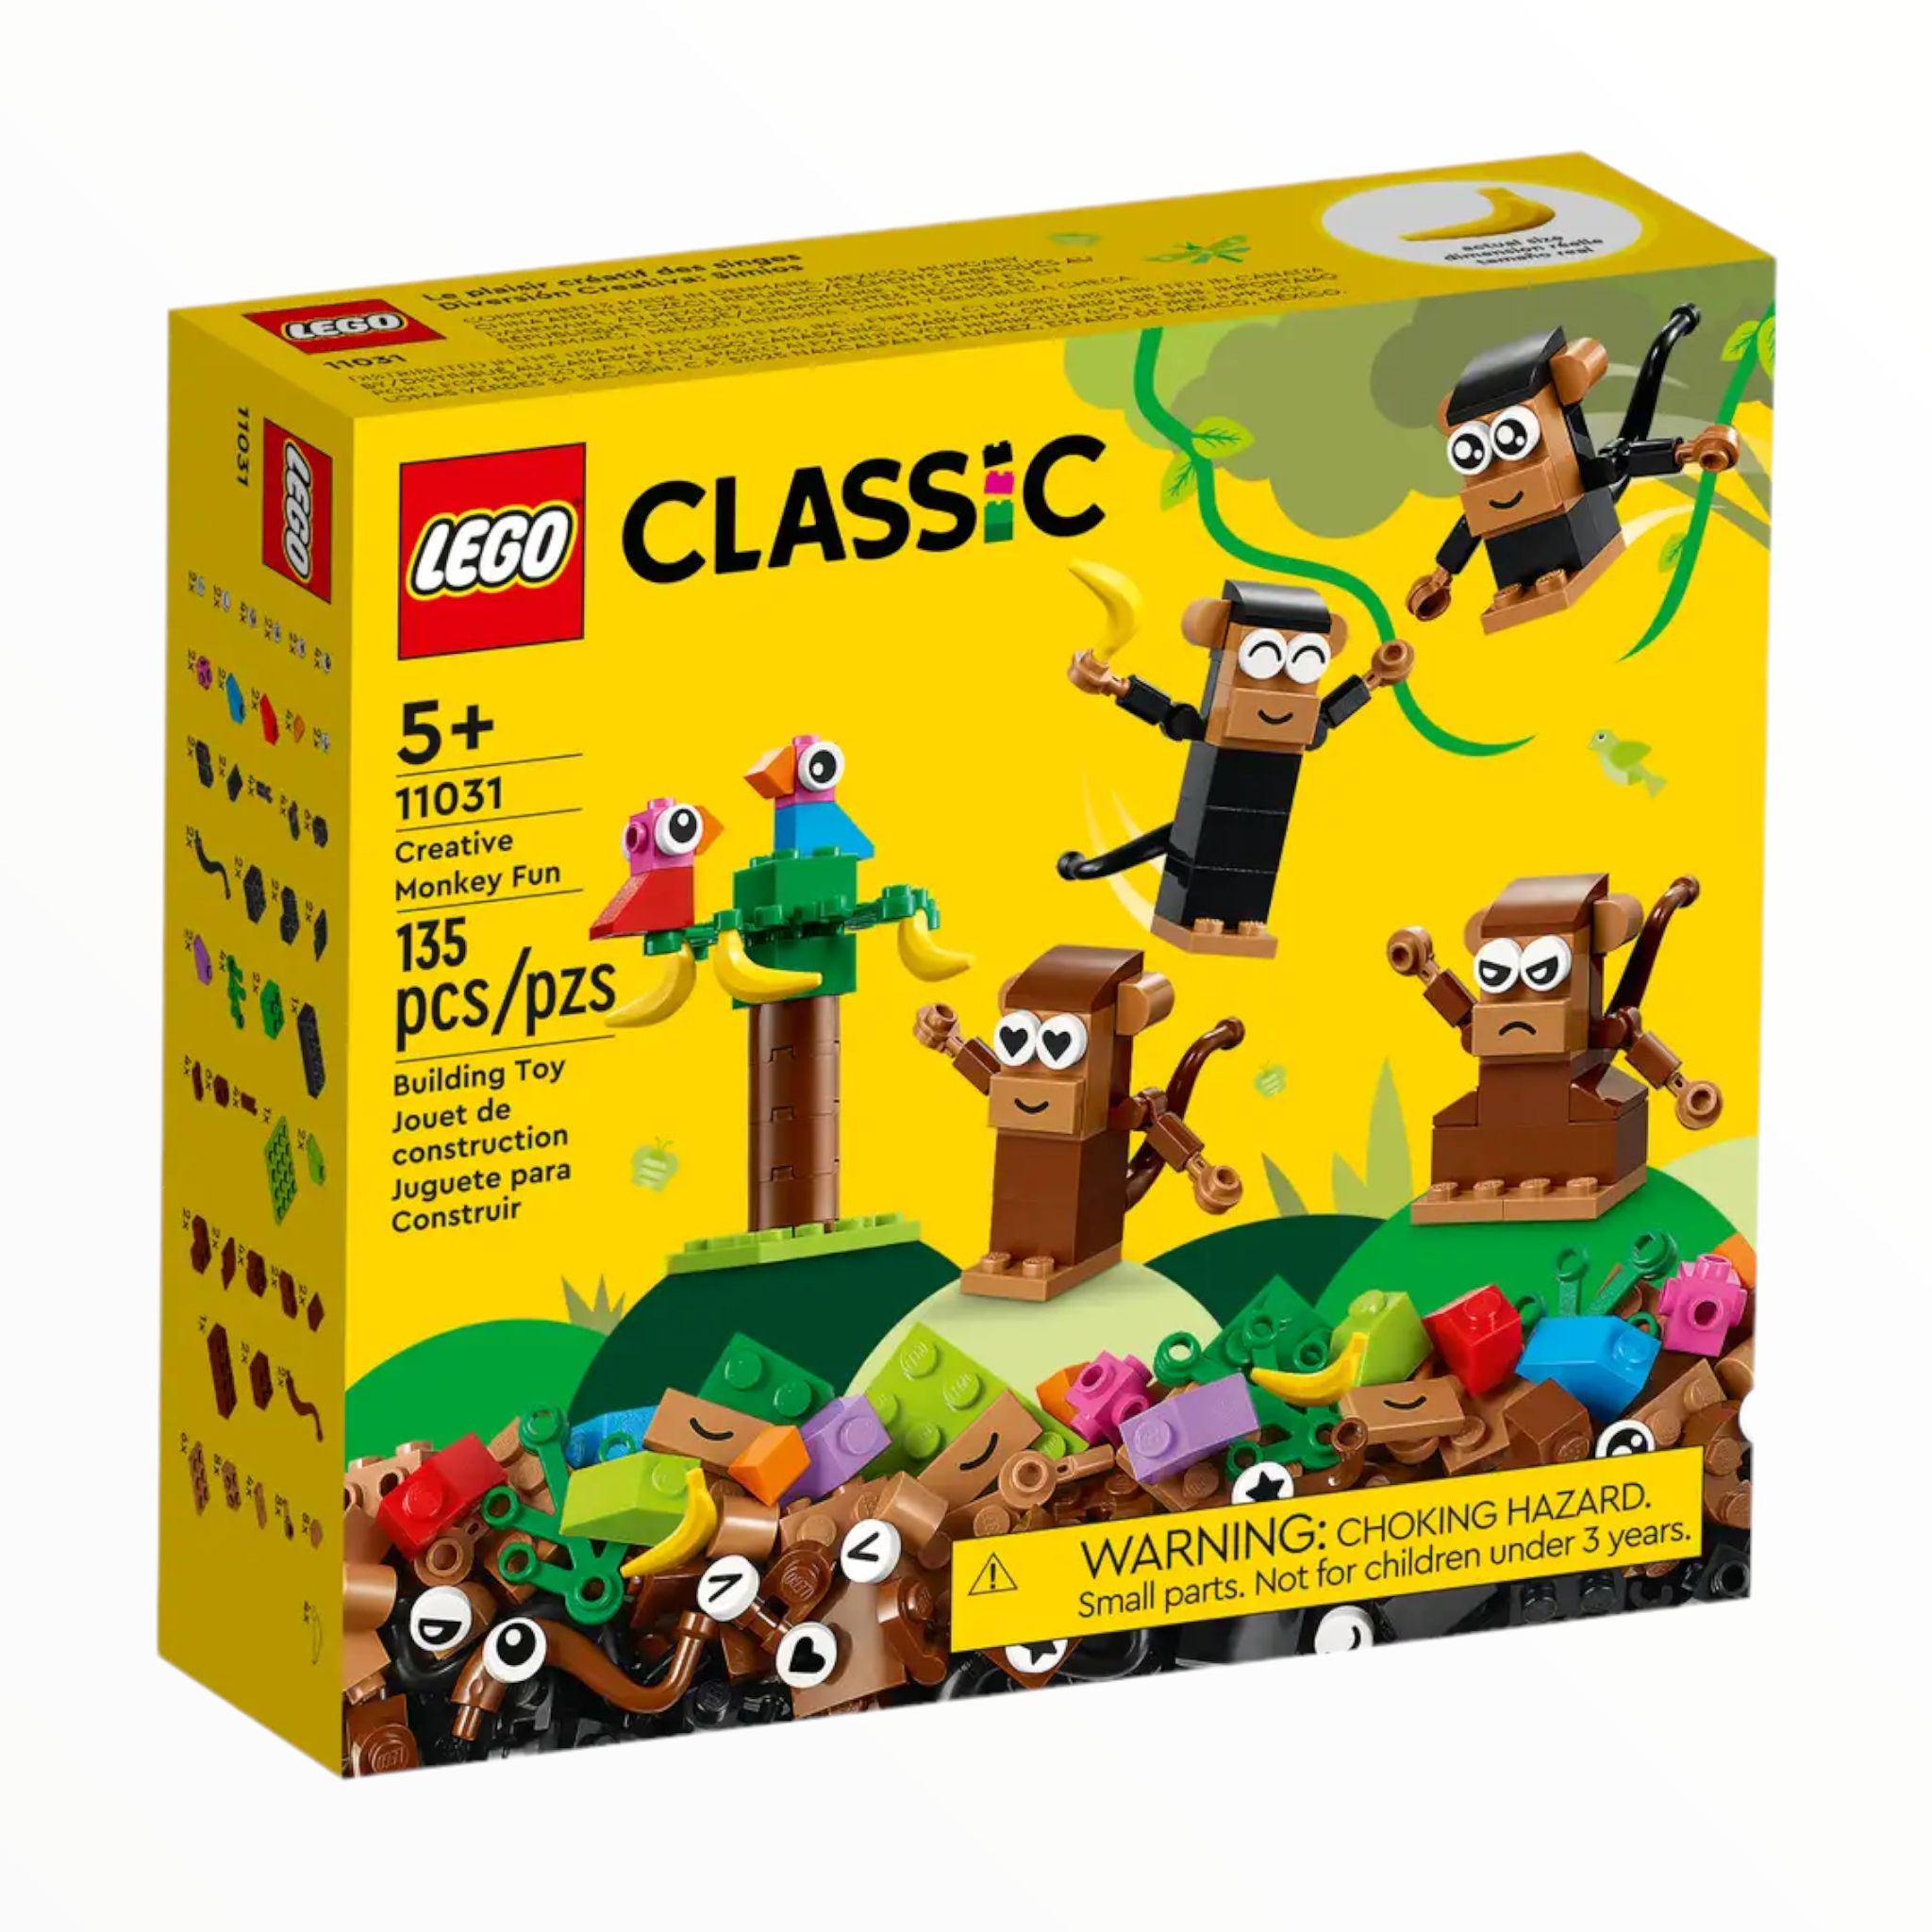 11031 Classic Creative Monkey Fun